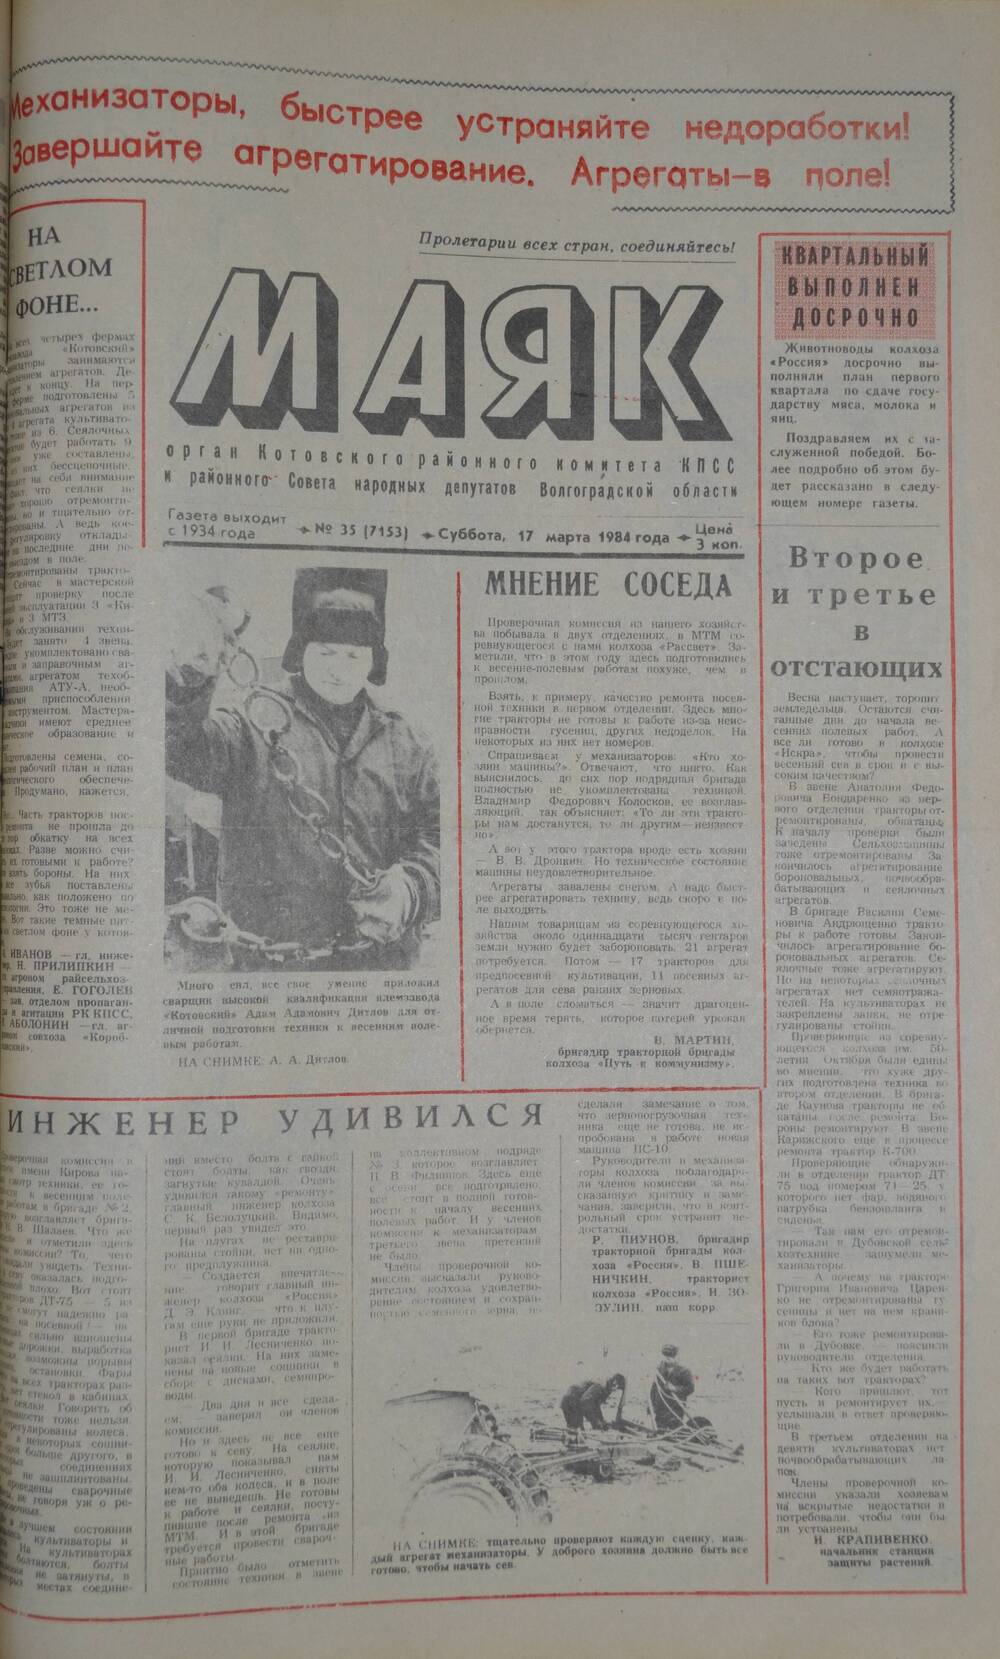 Газета Маяк № 35 (7153). Суббота, 17 марта 1984 года.